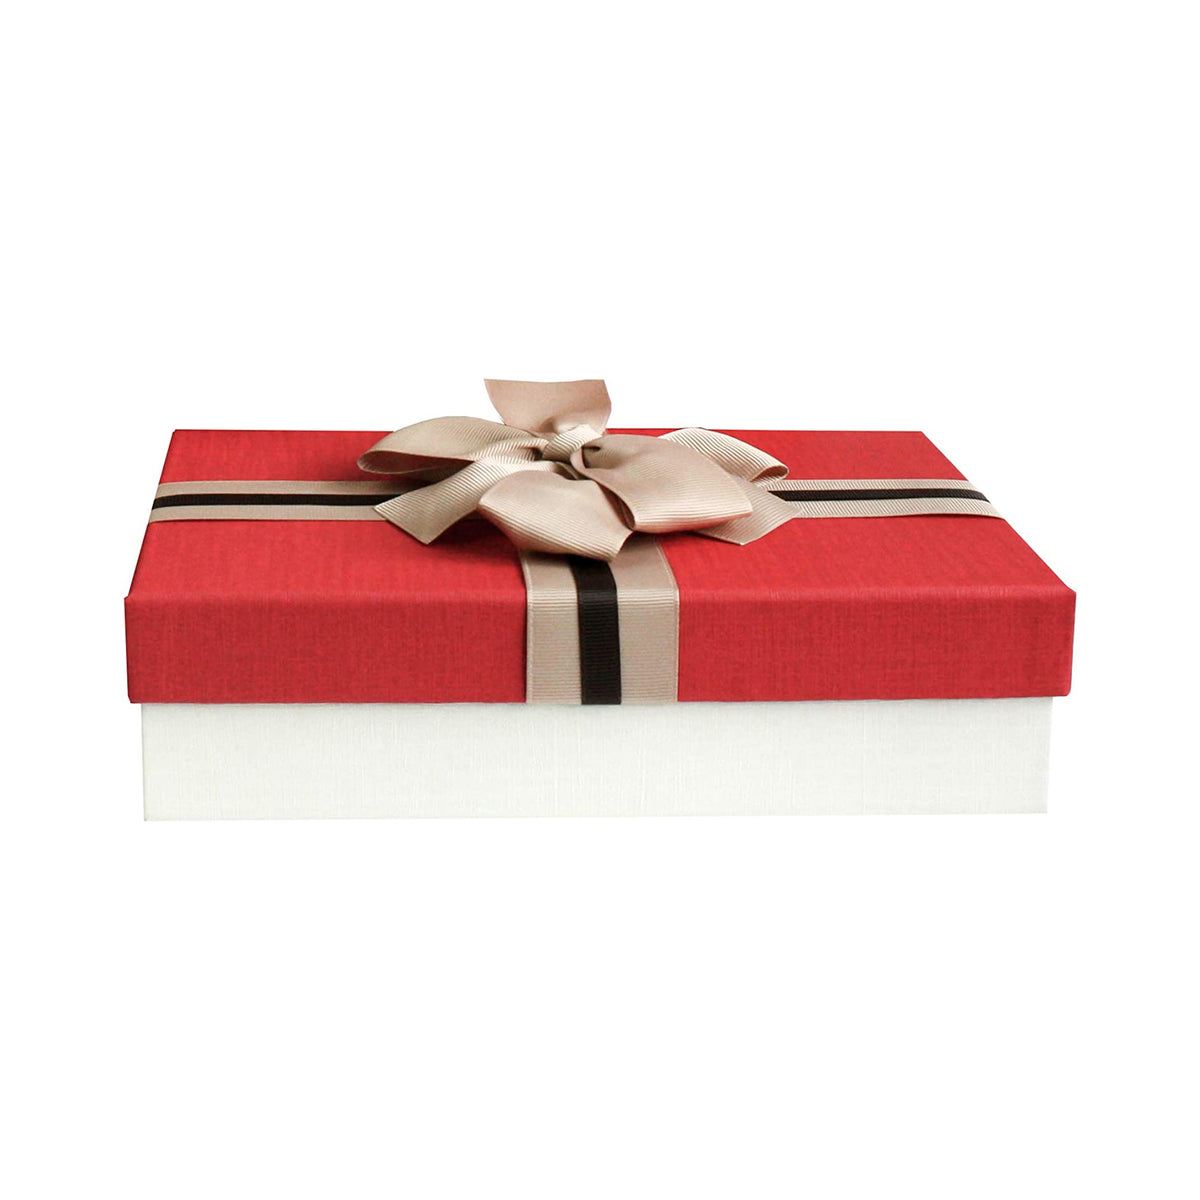 Elegant Cream/Red Gift Box - Single (Sizes Available)